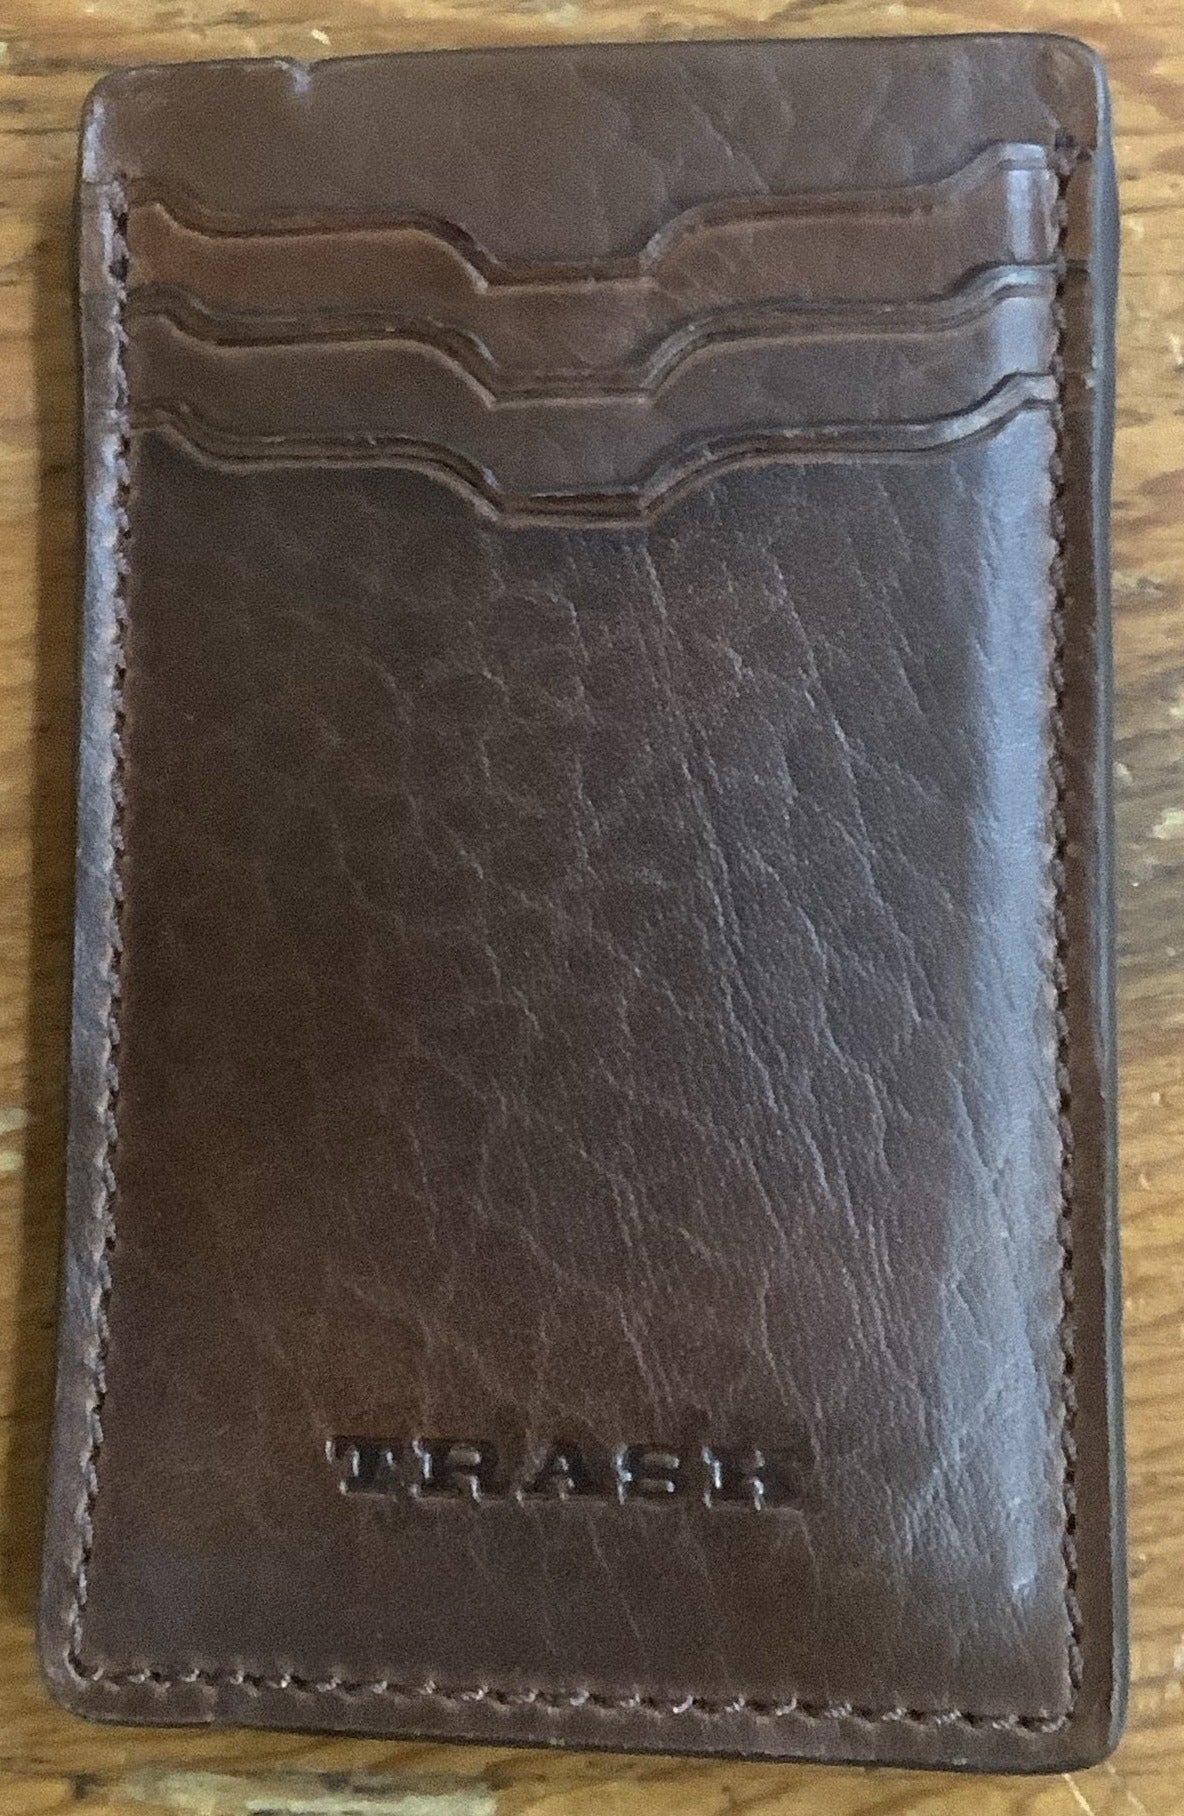 Trask "Jackson" - Front Pocket Wallet in Saddle Tan American Bison leather